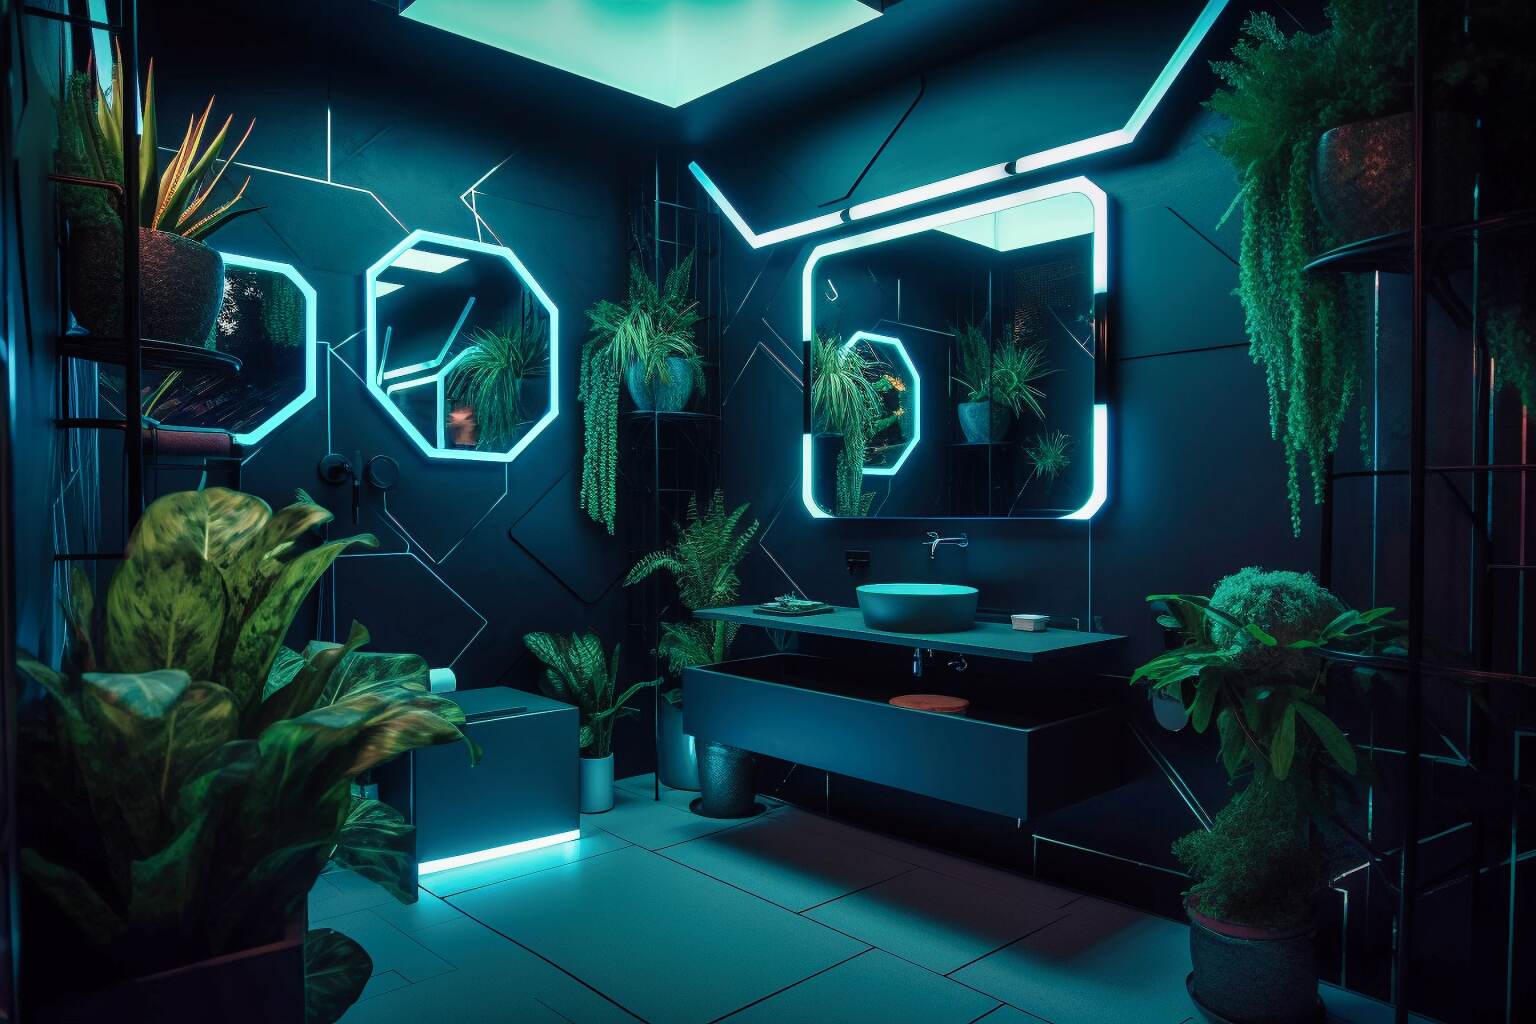 Cyberpunk Bathroom With Geometric Glass Panels Housing